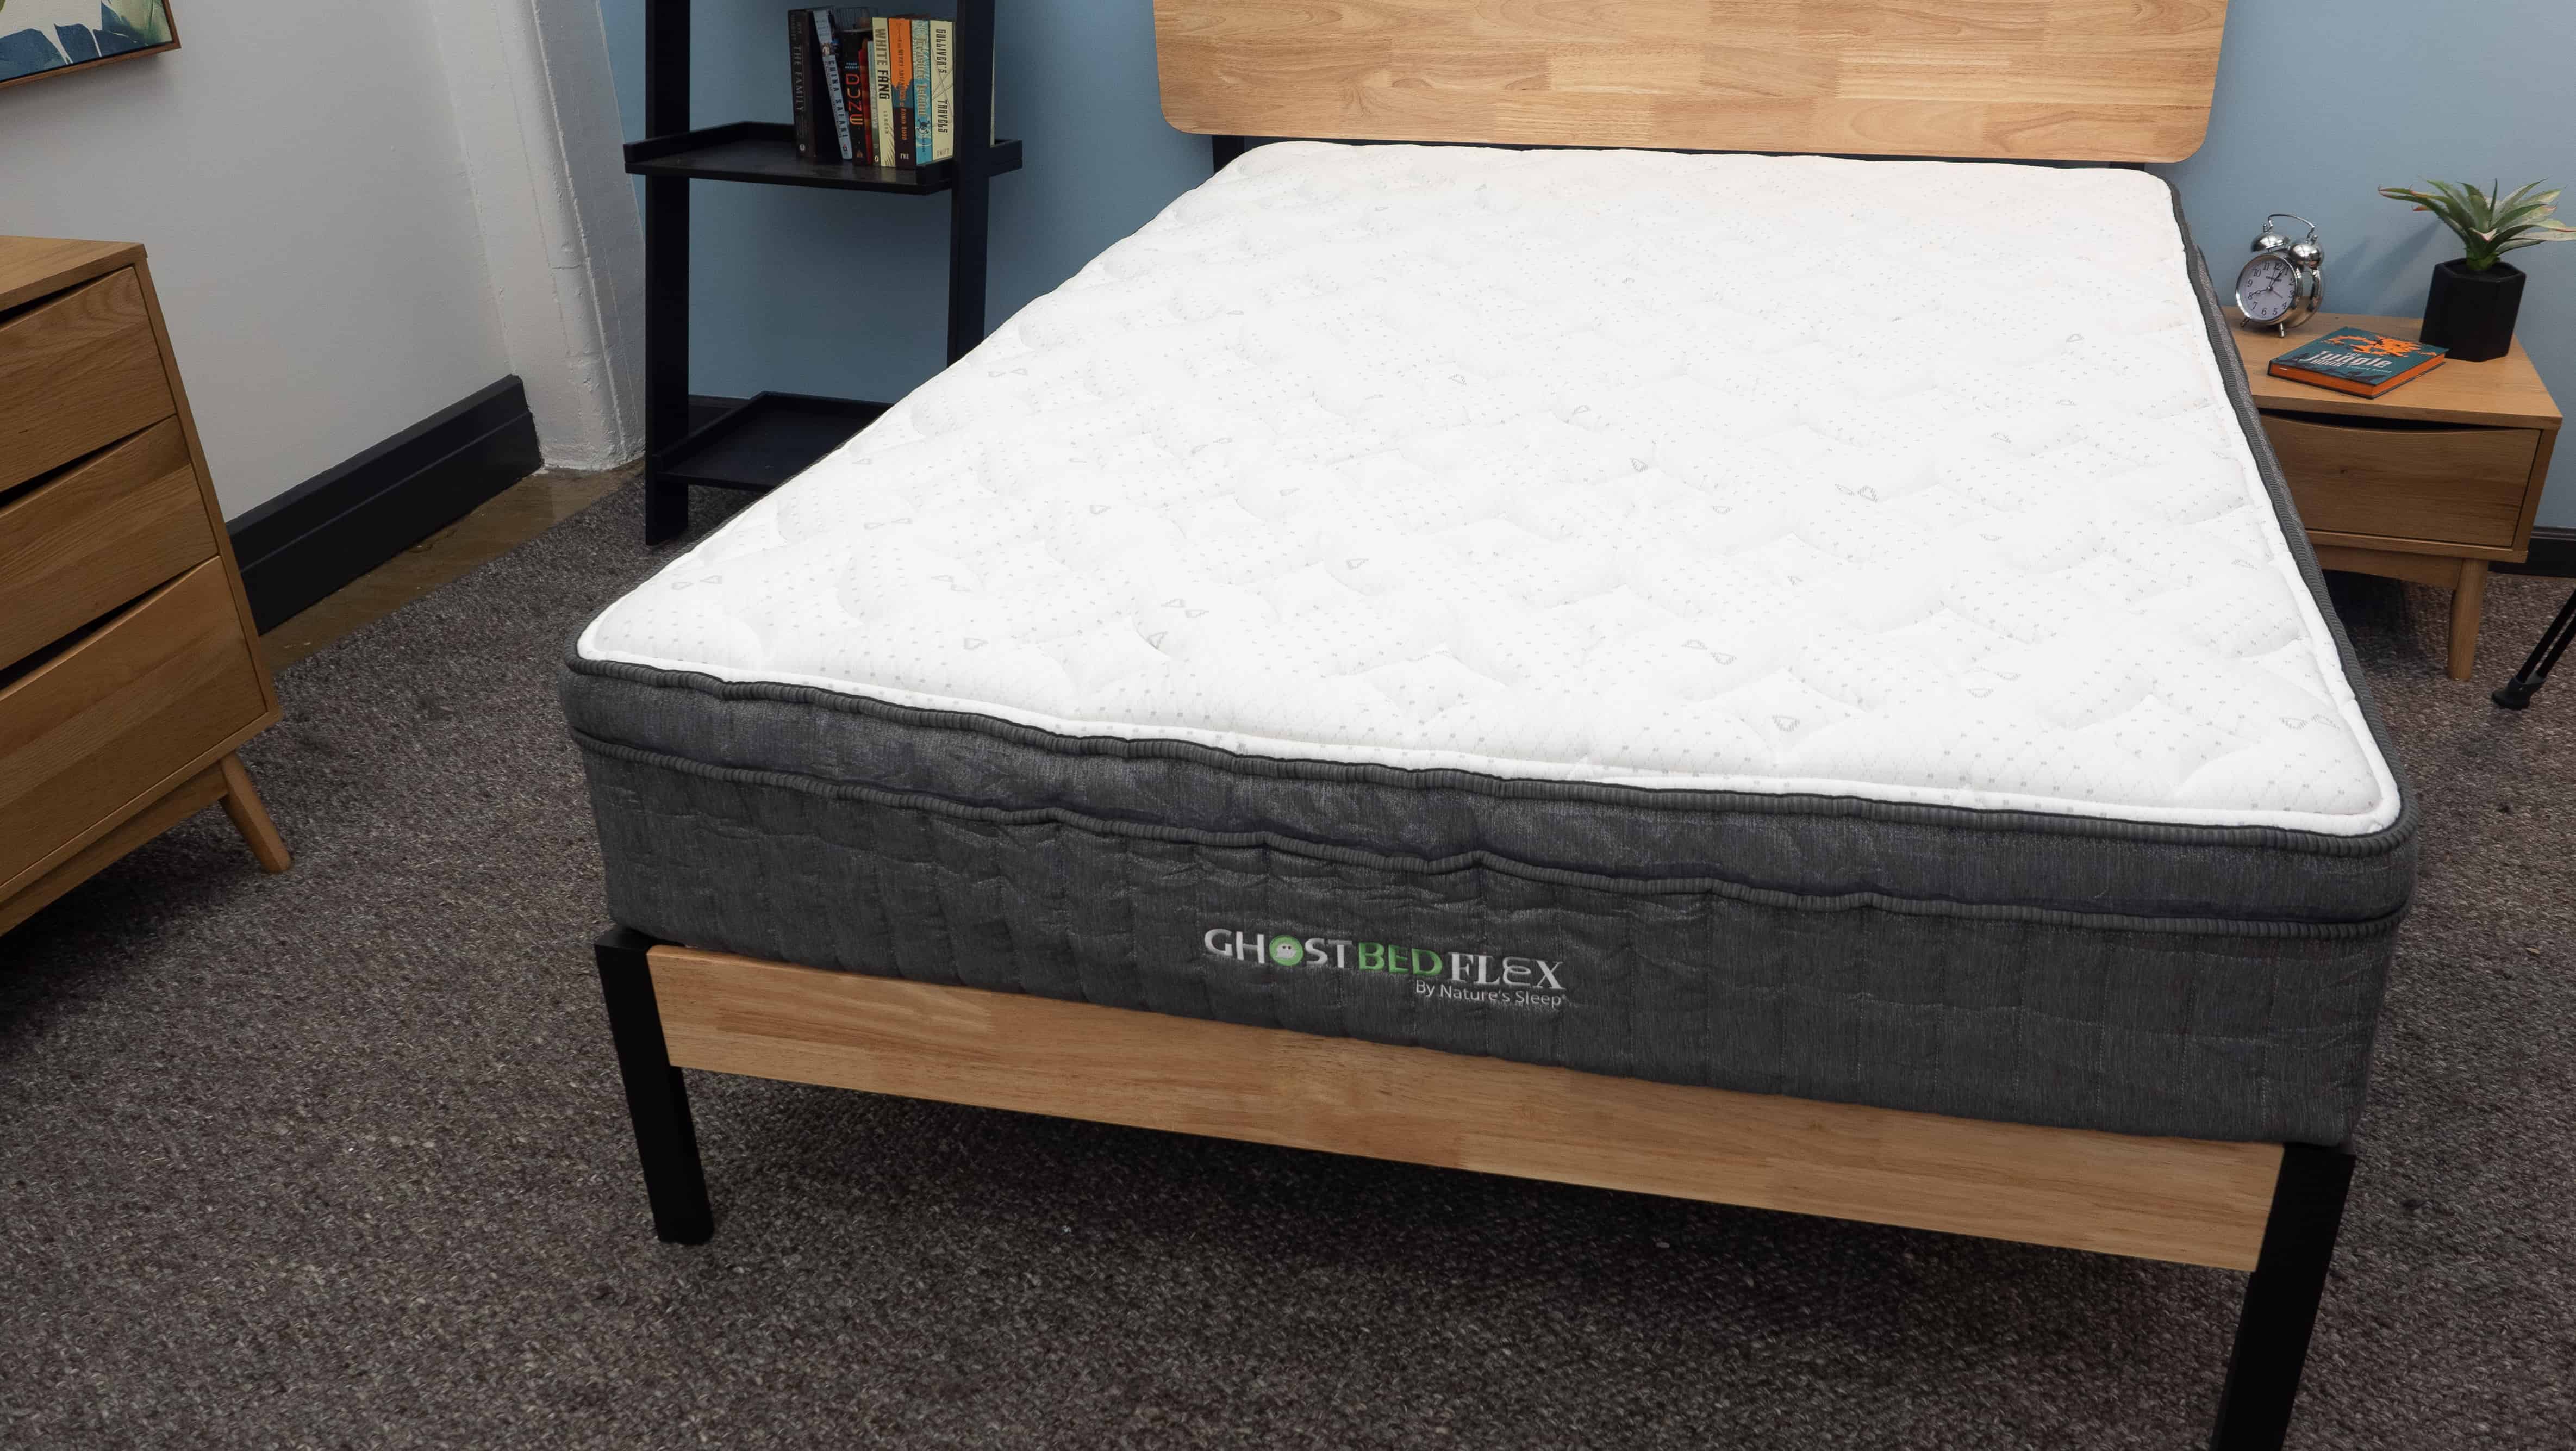 do ghostbed mattresses have fiberglass